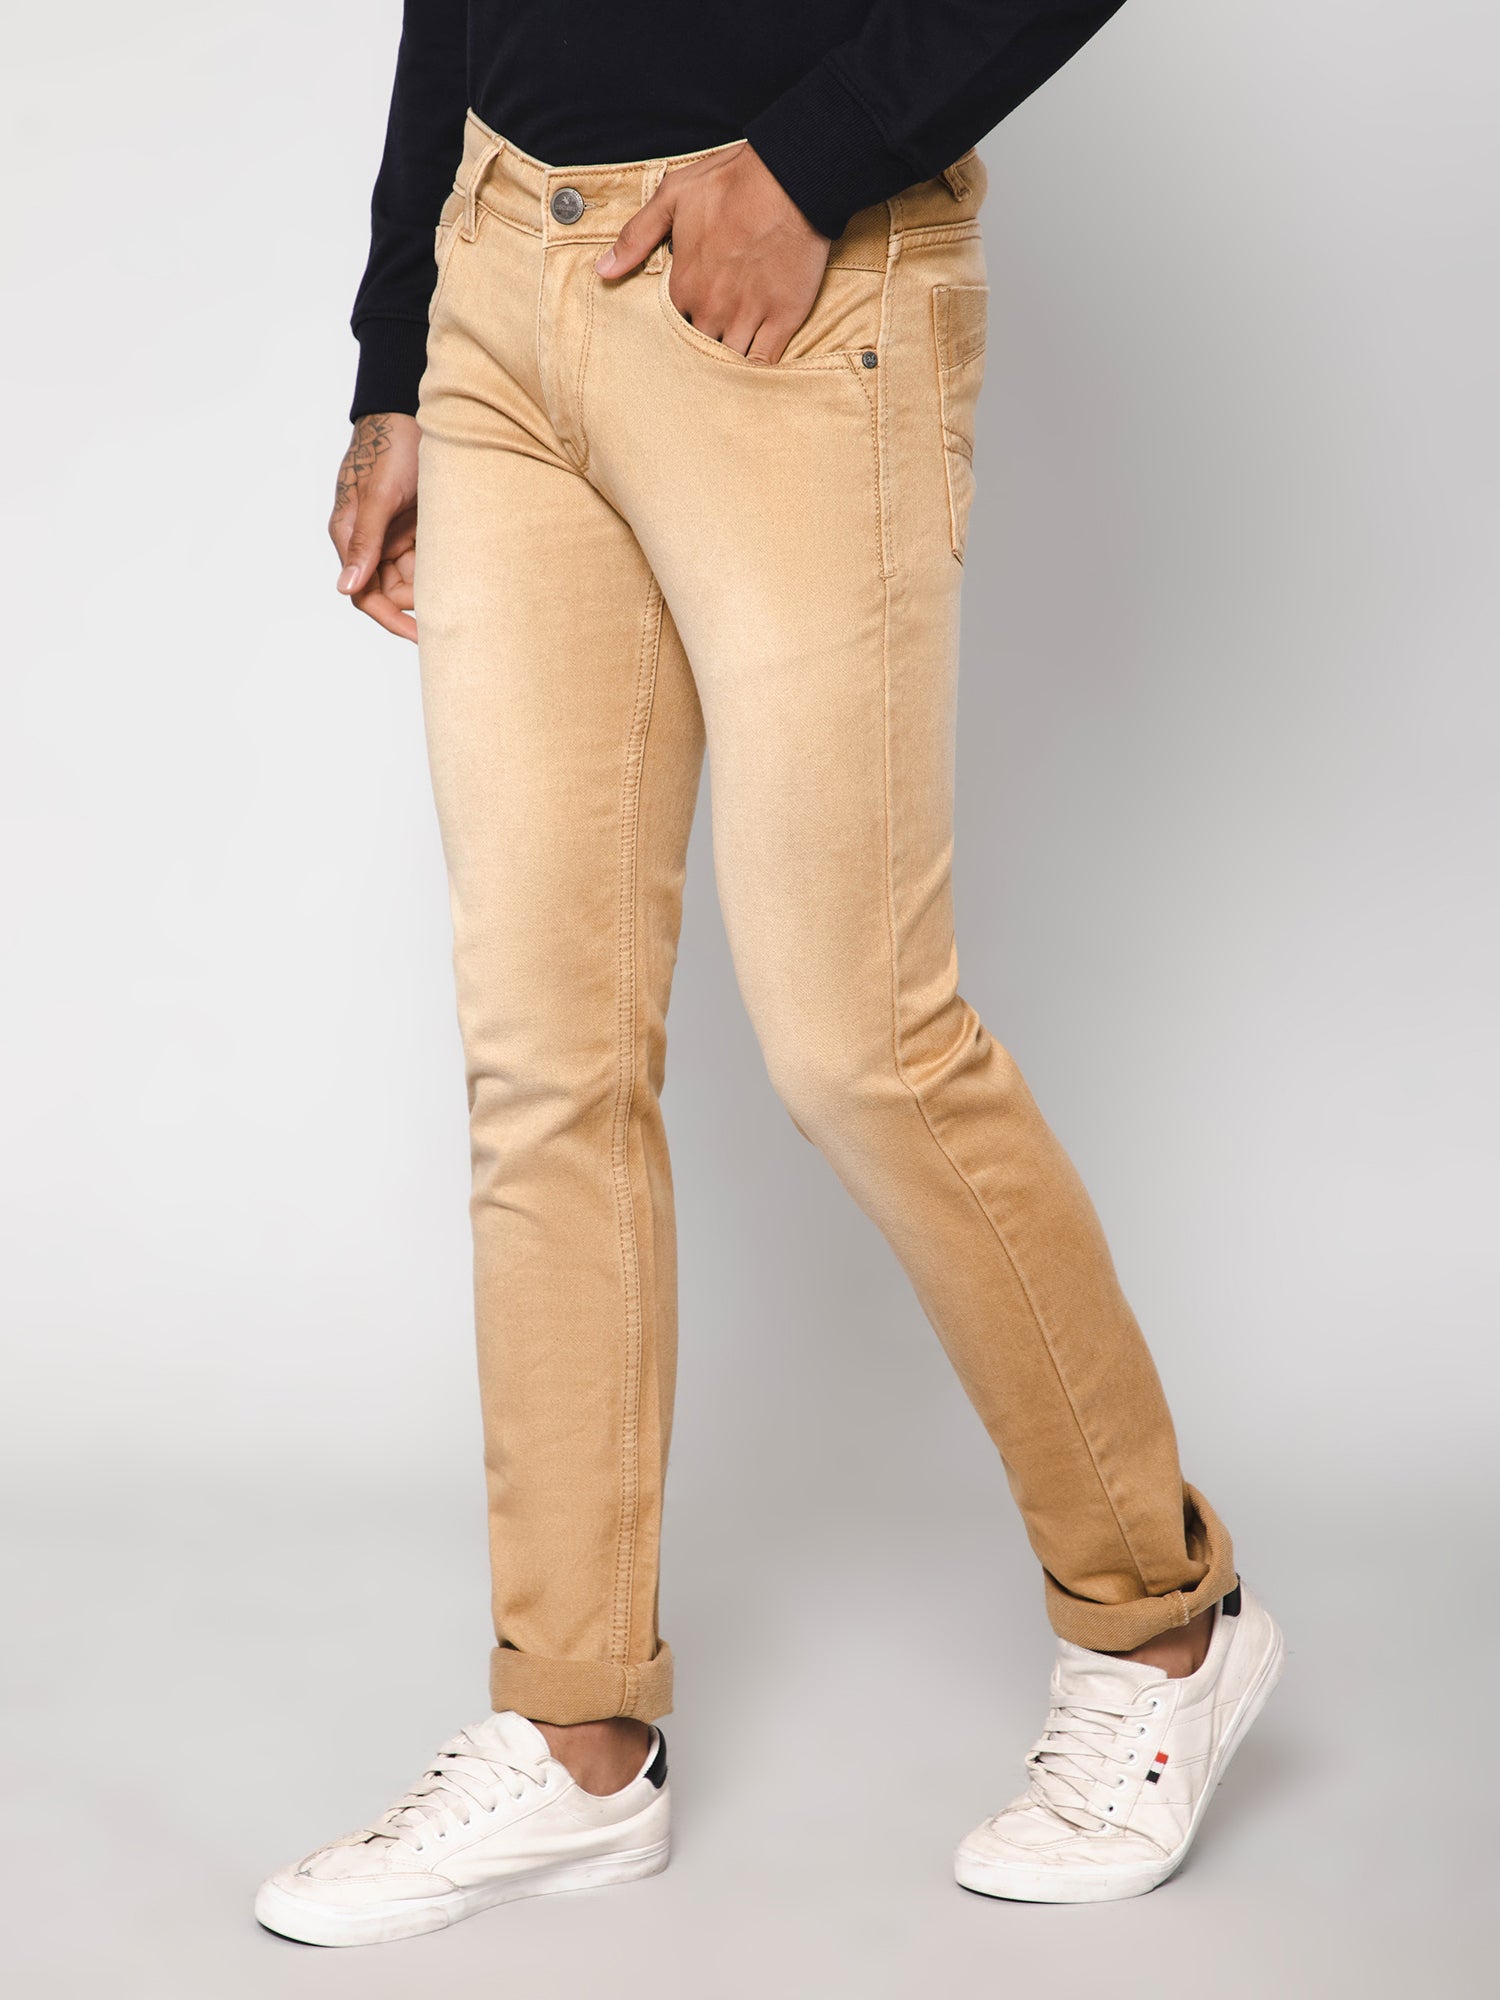 Buy Khaki Jeans for Men by GABON Online  Ajiocom